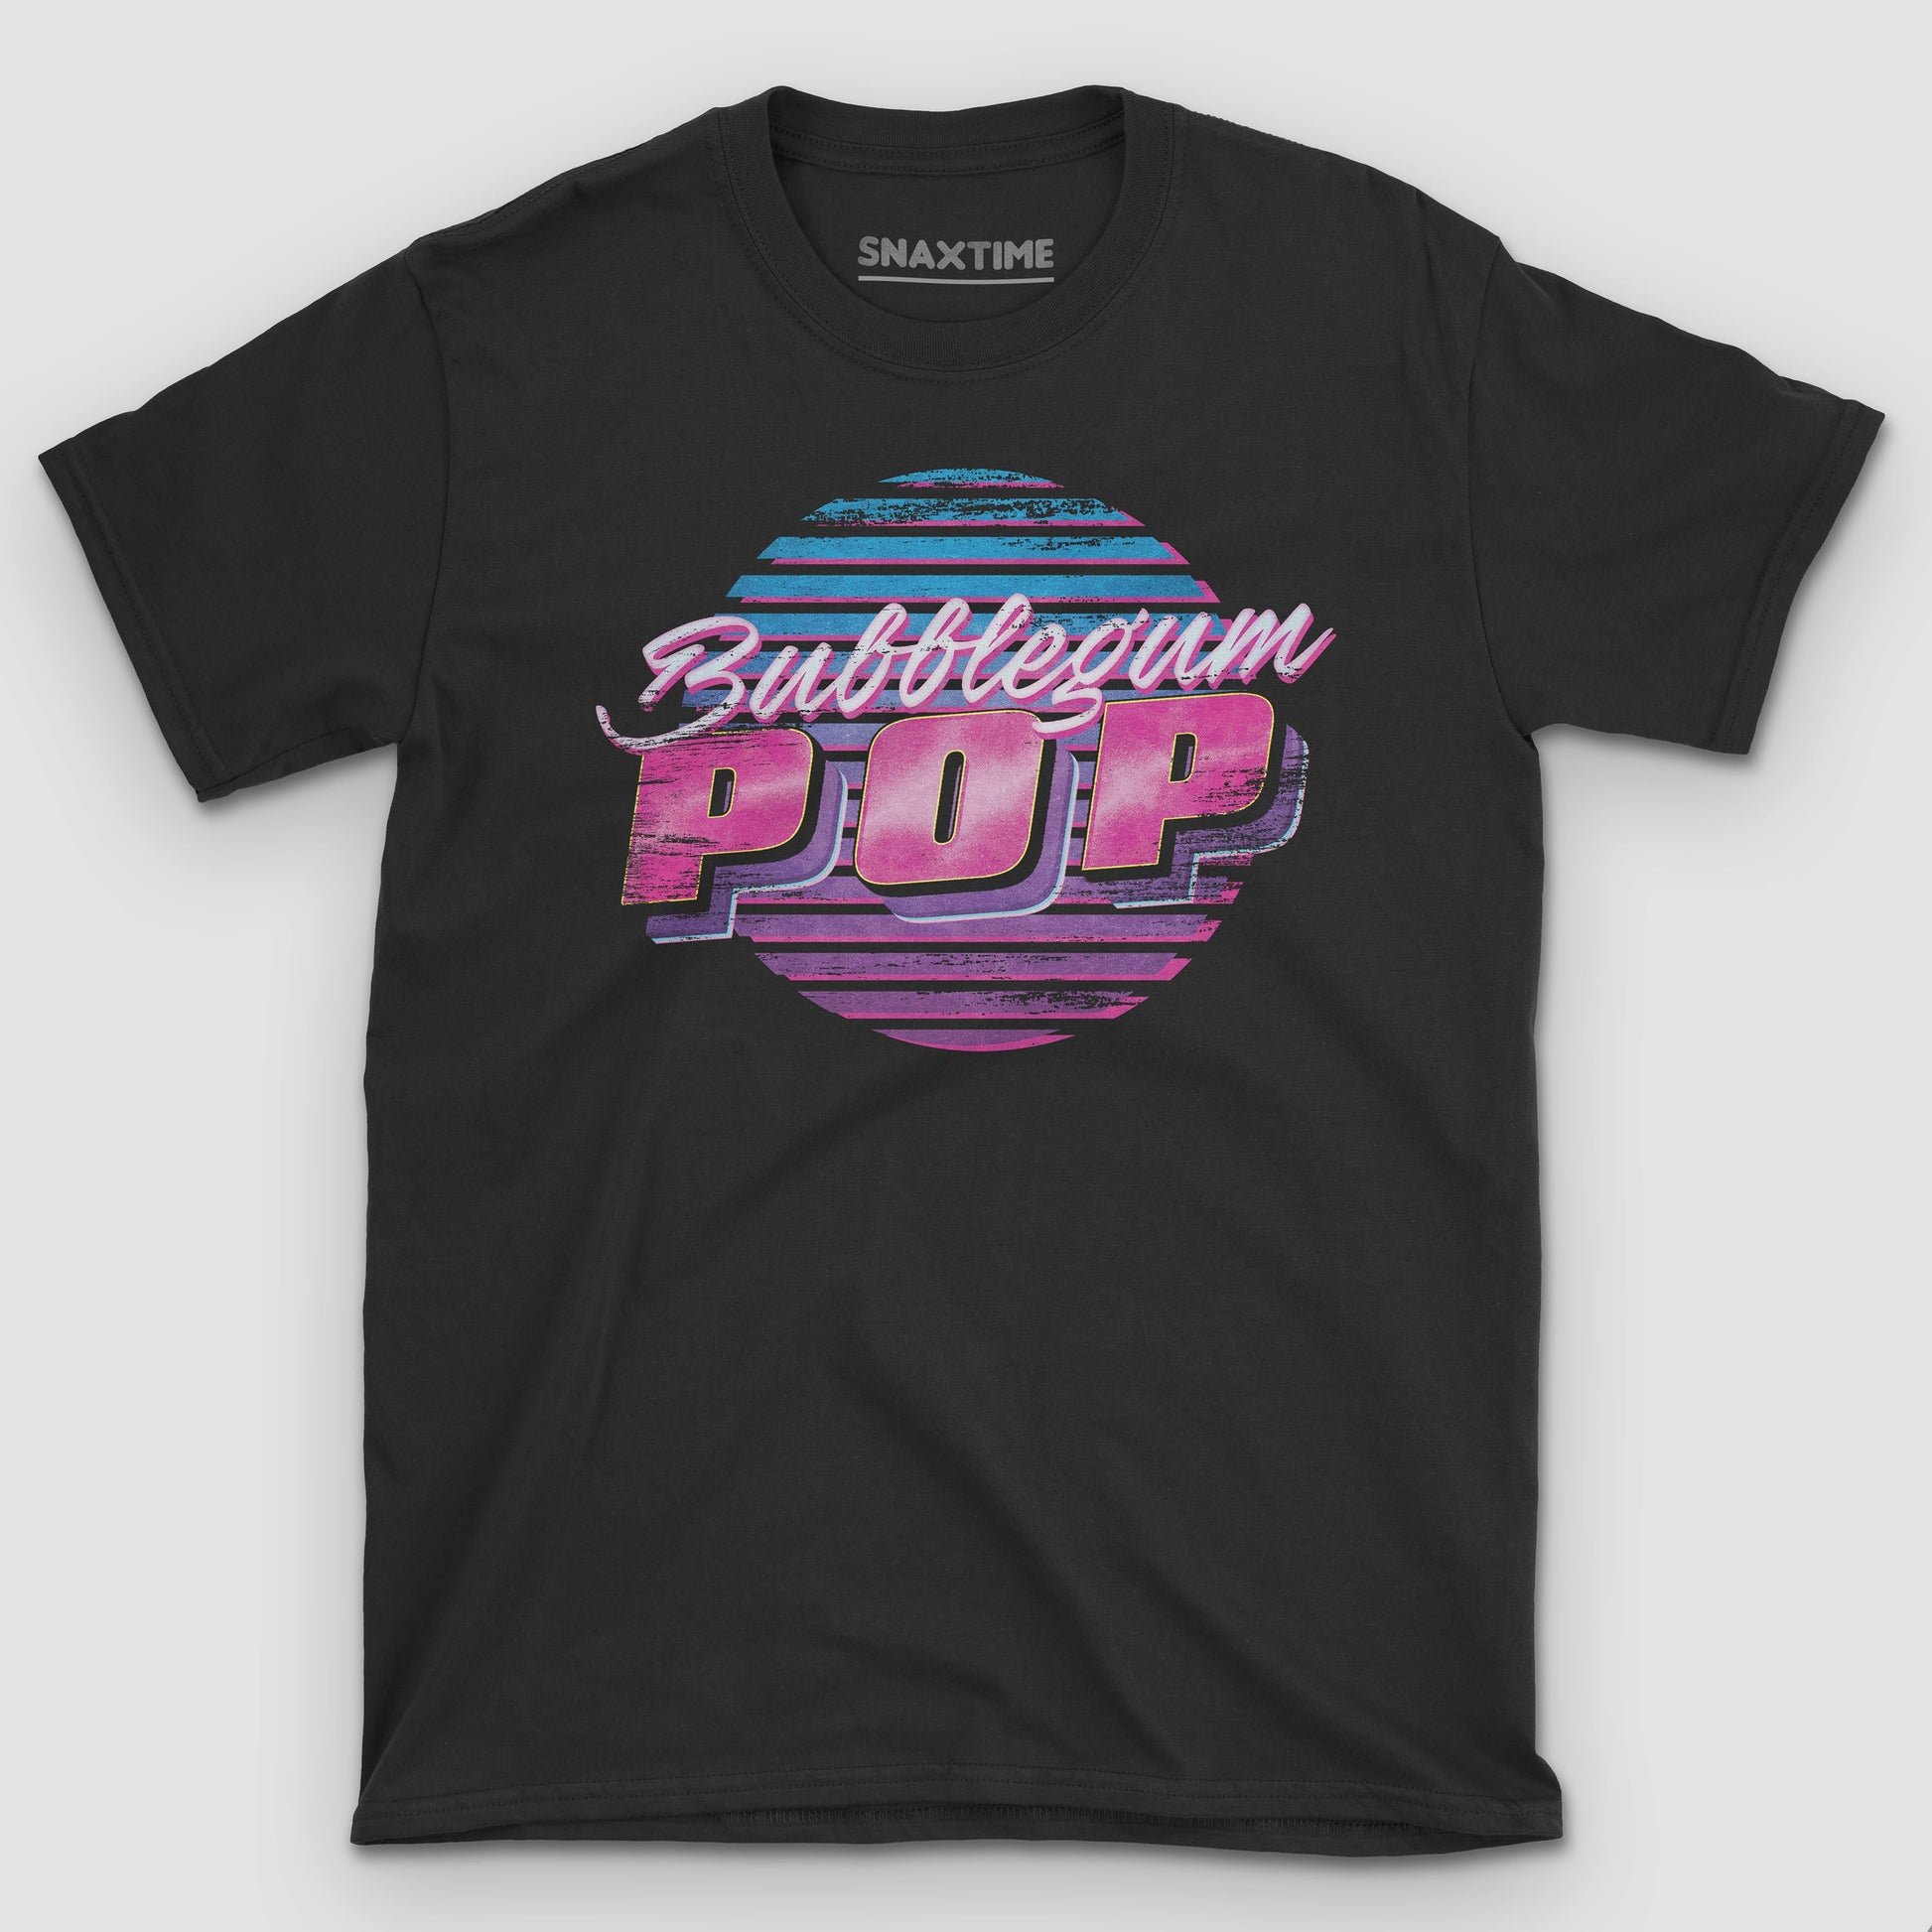  Bubblegum Pop Graphic T-Shirt by Snaxtime